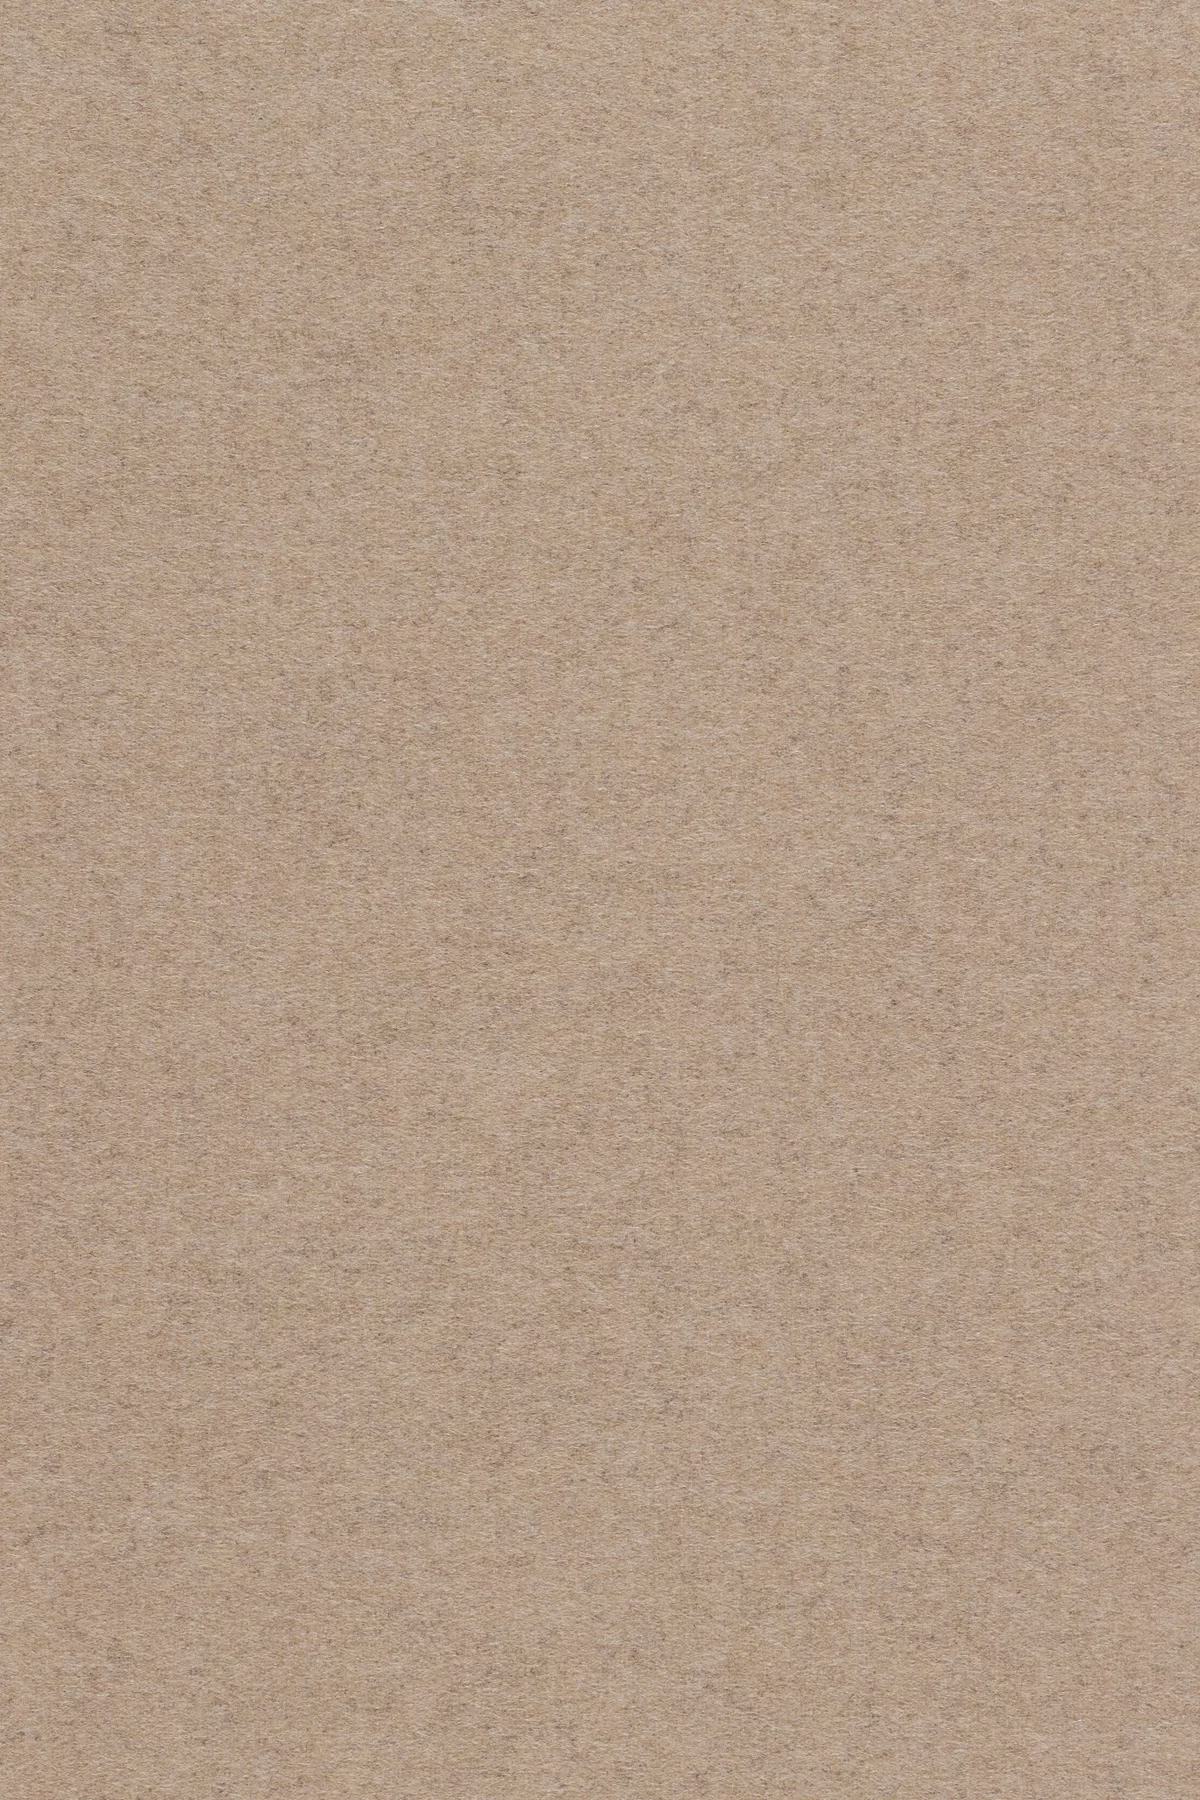 Fabric sample Divina MD 413 brown